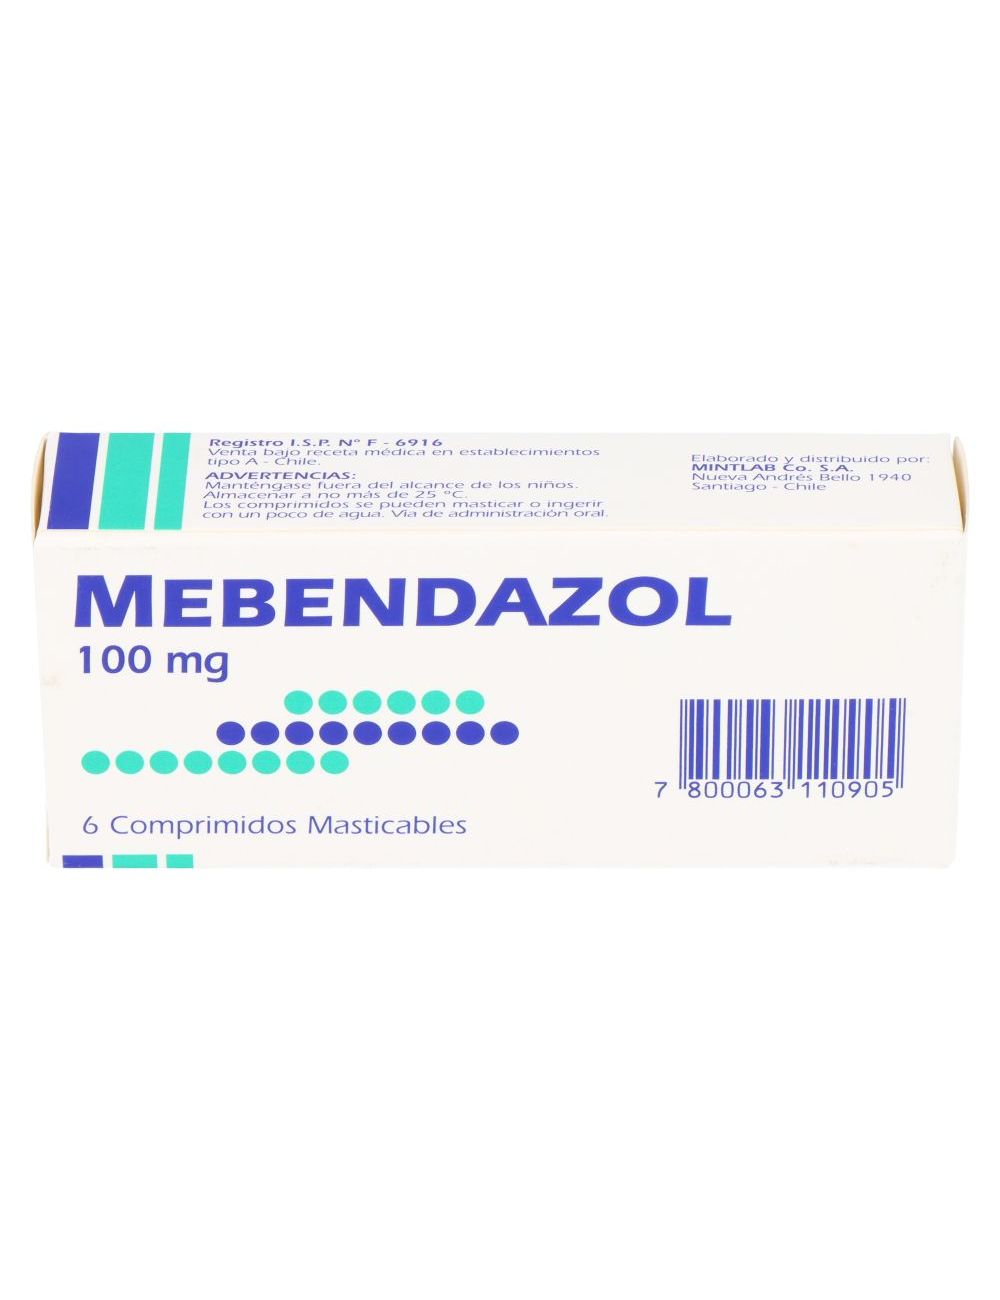 Mebendazol Mg Comprimidos Masticables Mintlab